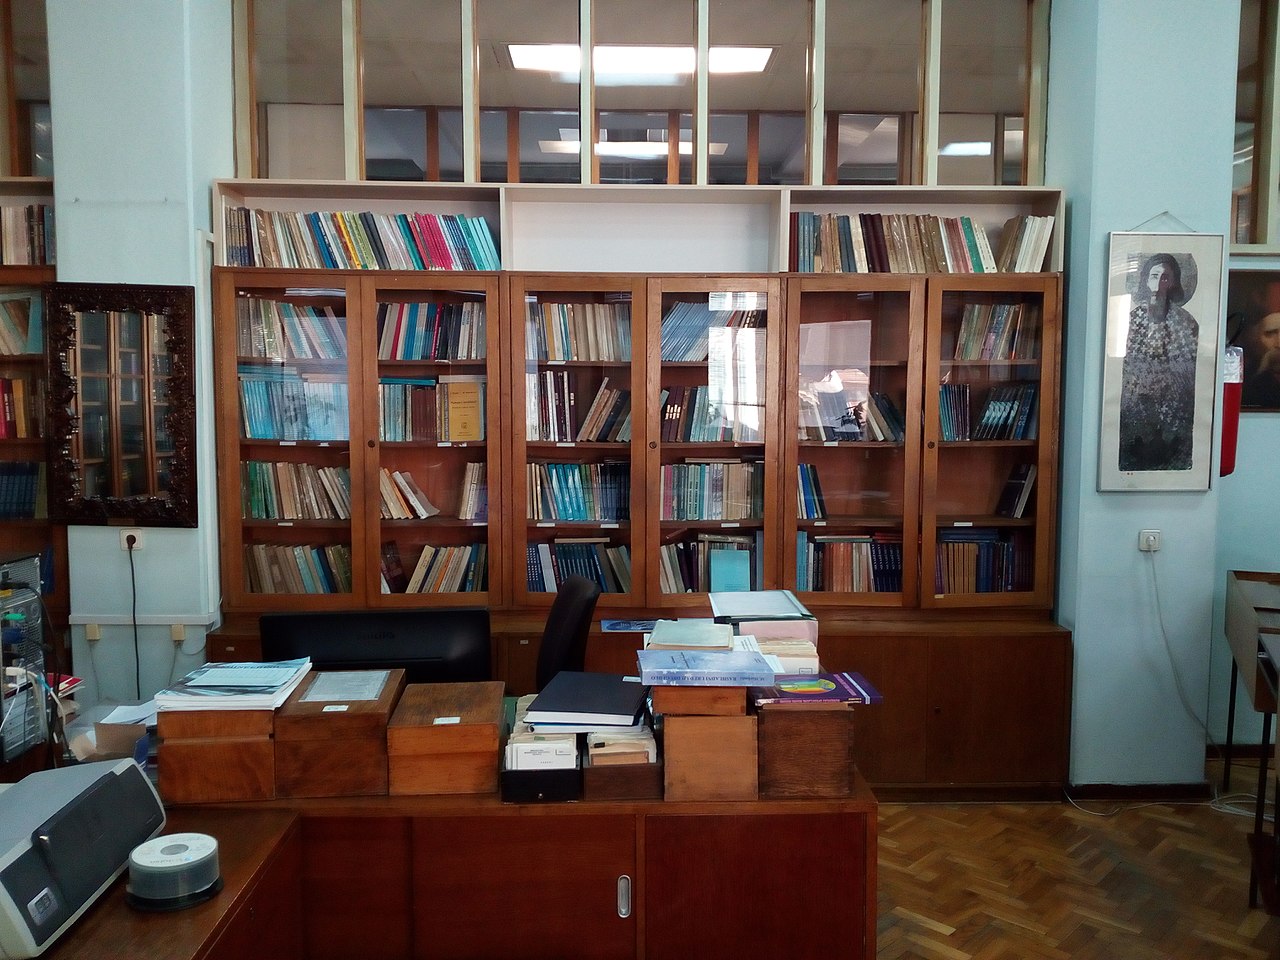 fluiten Afvoer Onderhoudbaar File:Library at University of Belgrade, Faculty of Mechanical Engineering  03.jpg - Wikimedia Commons